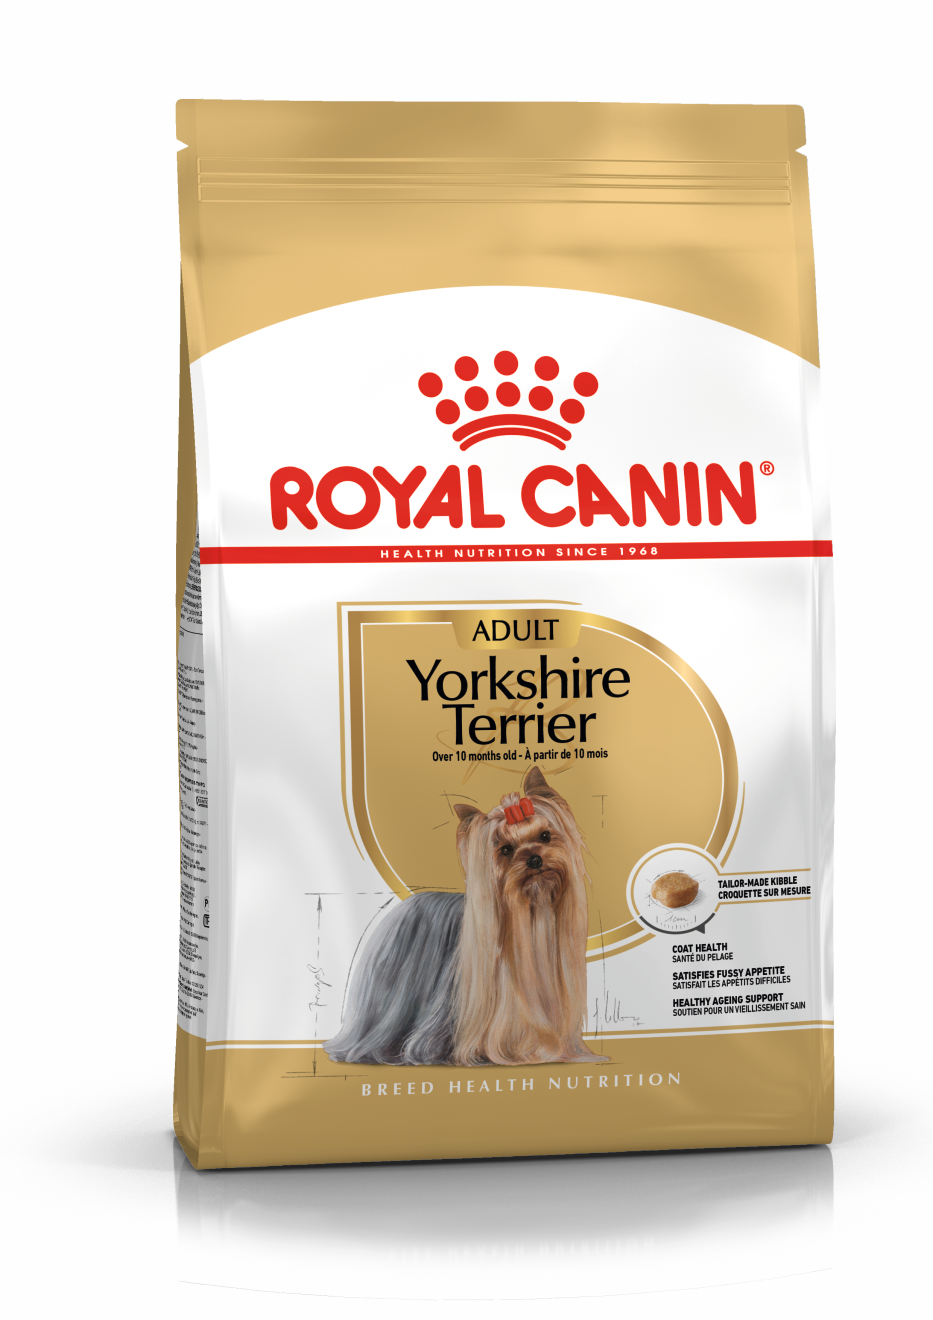 Royal Canin Yorkshire Terrier Adult - Aliment pour chien Yorkshire Terrier adulte et mature -À partir de 10 mois - 1,5kg